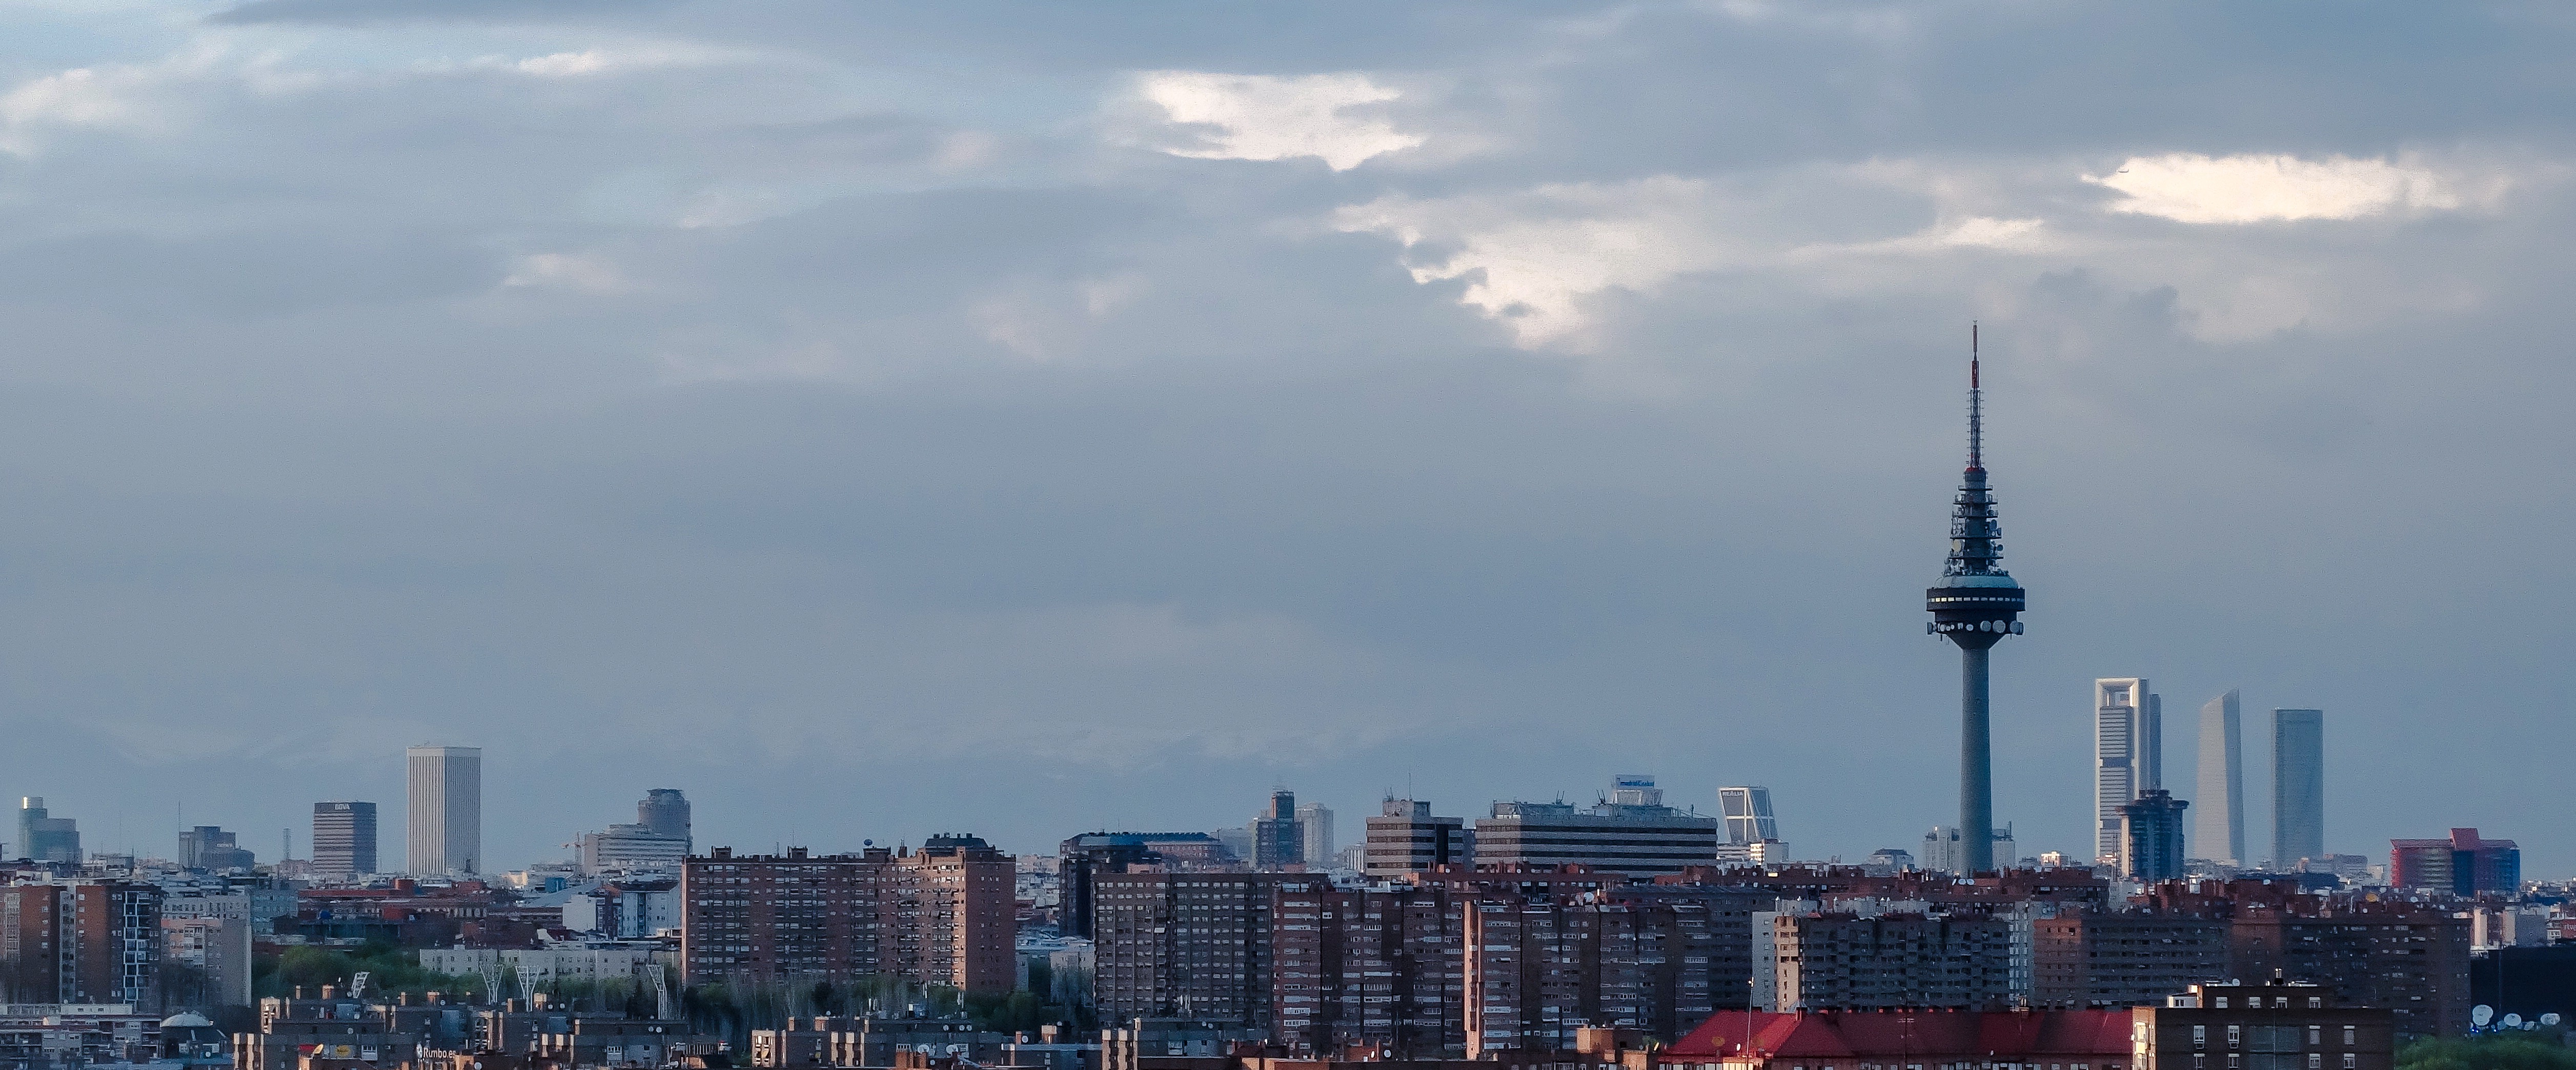 Skyline of Madrid, Spain image - Free stock photo - Public ...